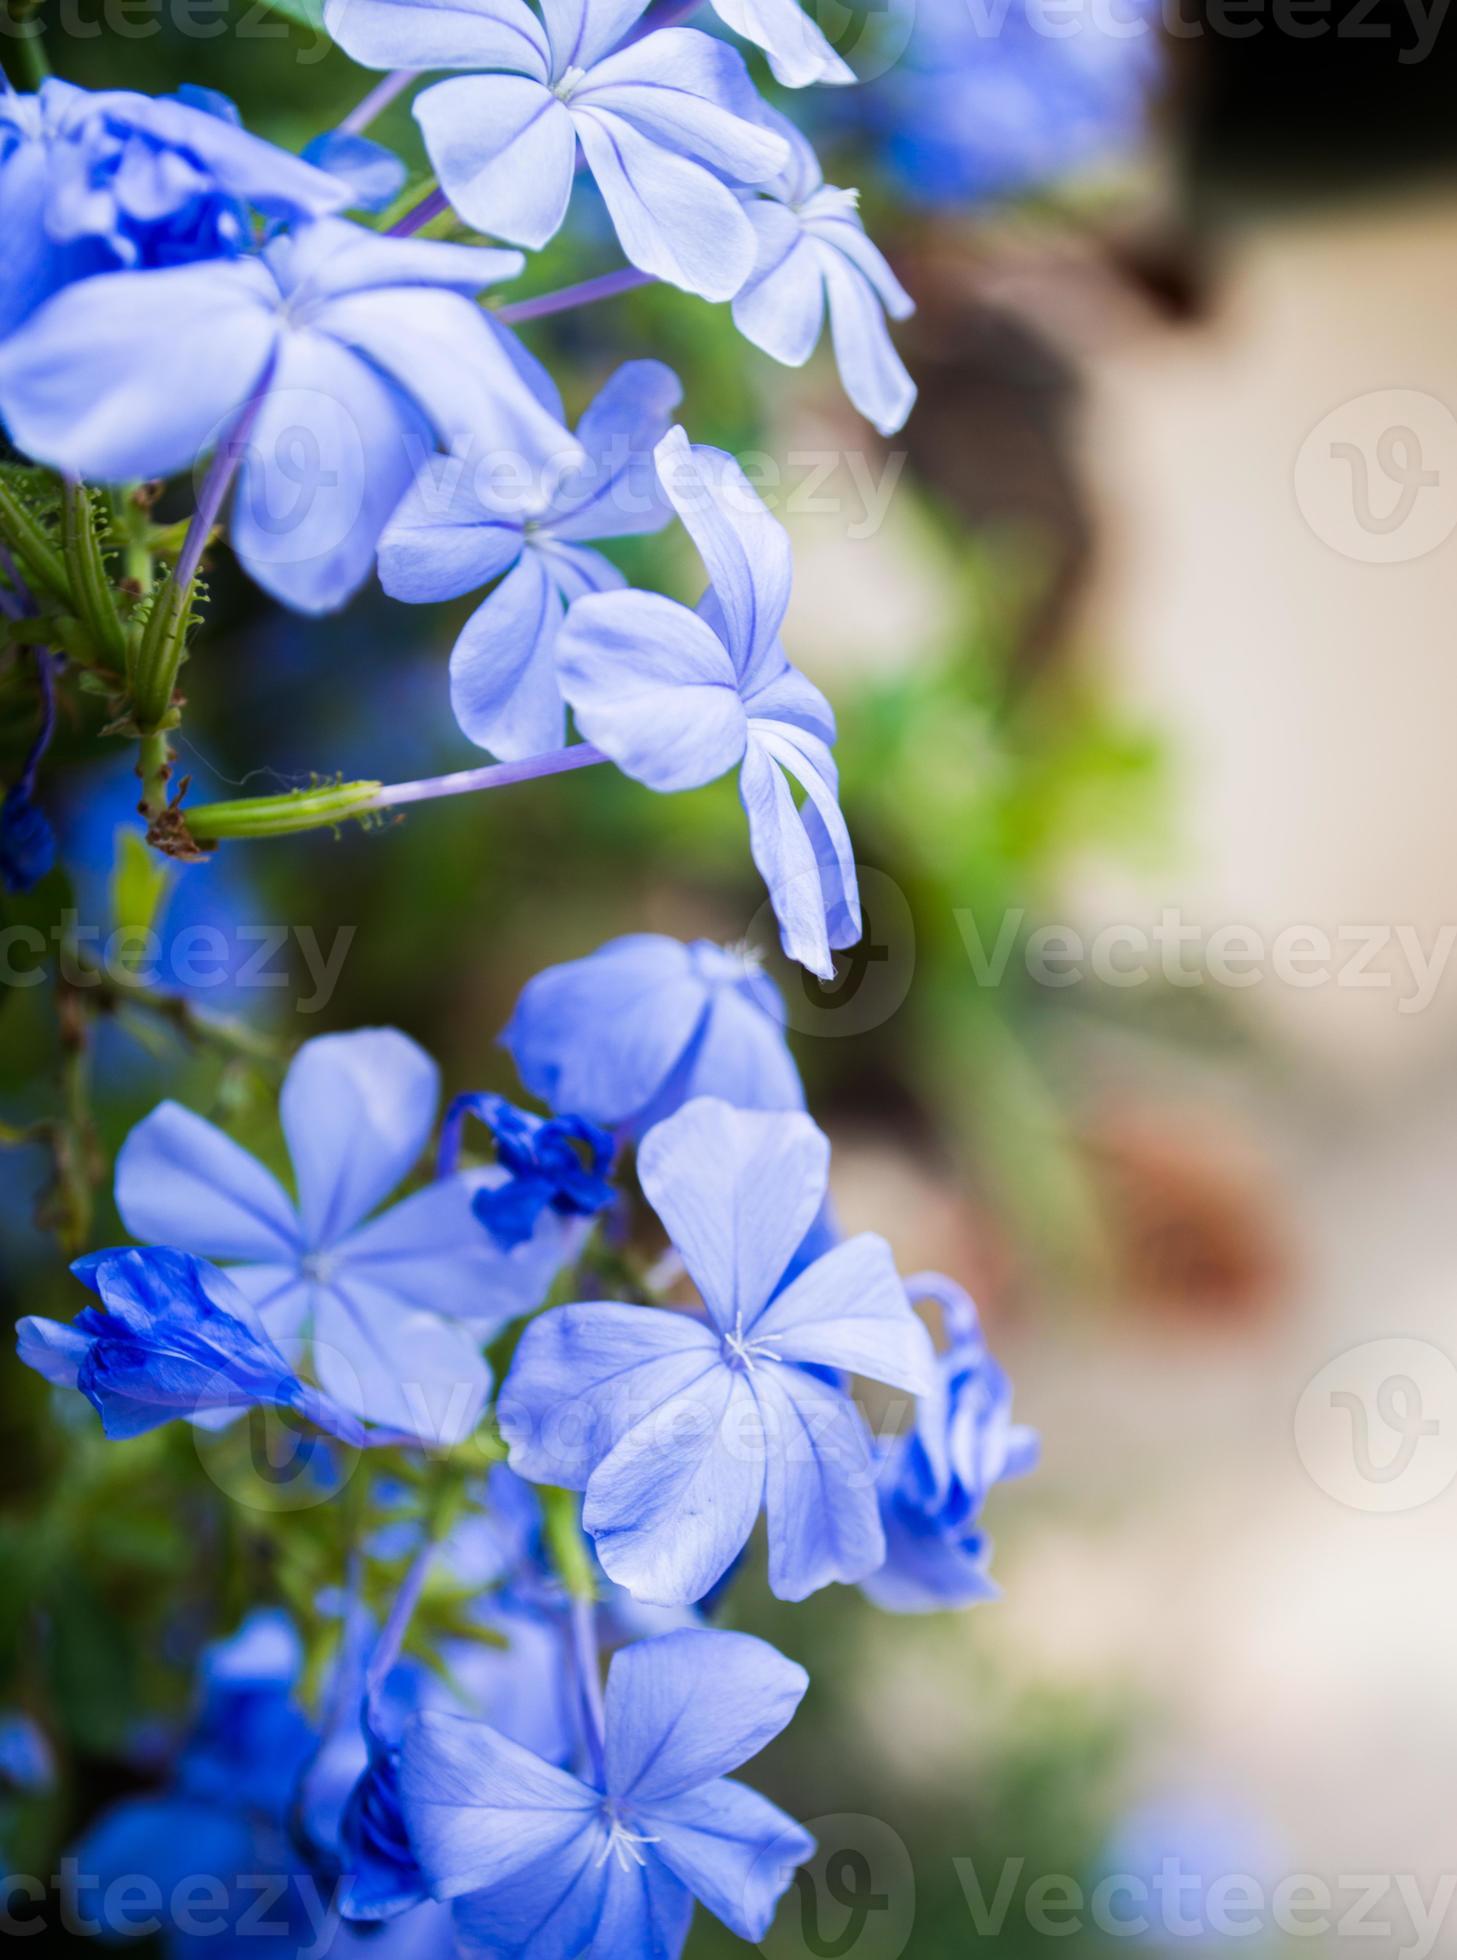 flor azul violeta 1322505 Foto de stock en Vecteezy